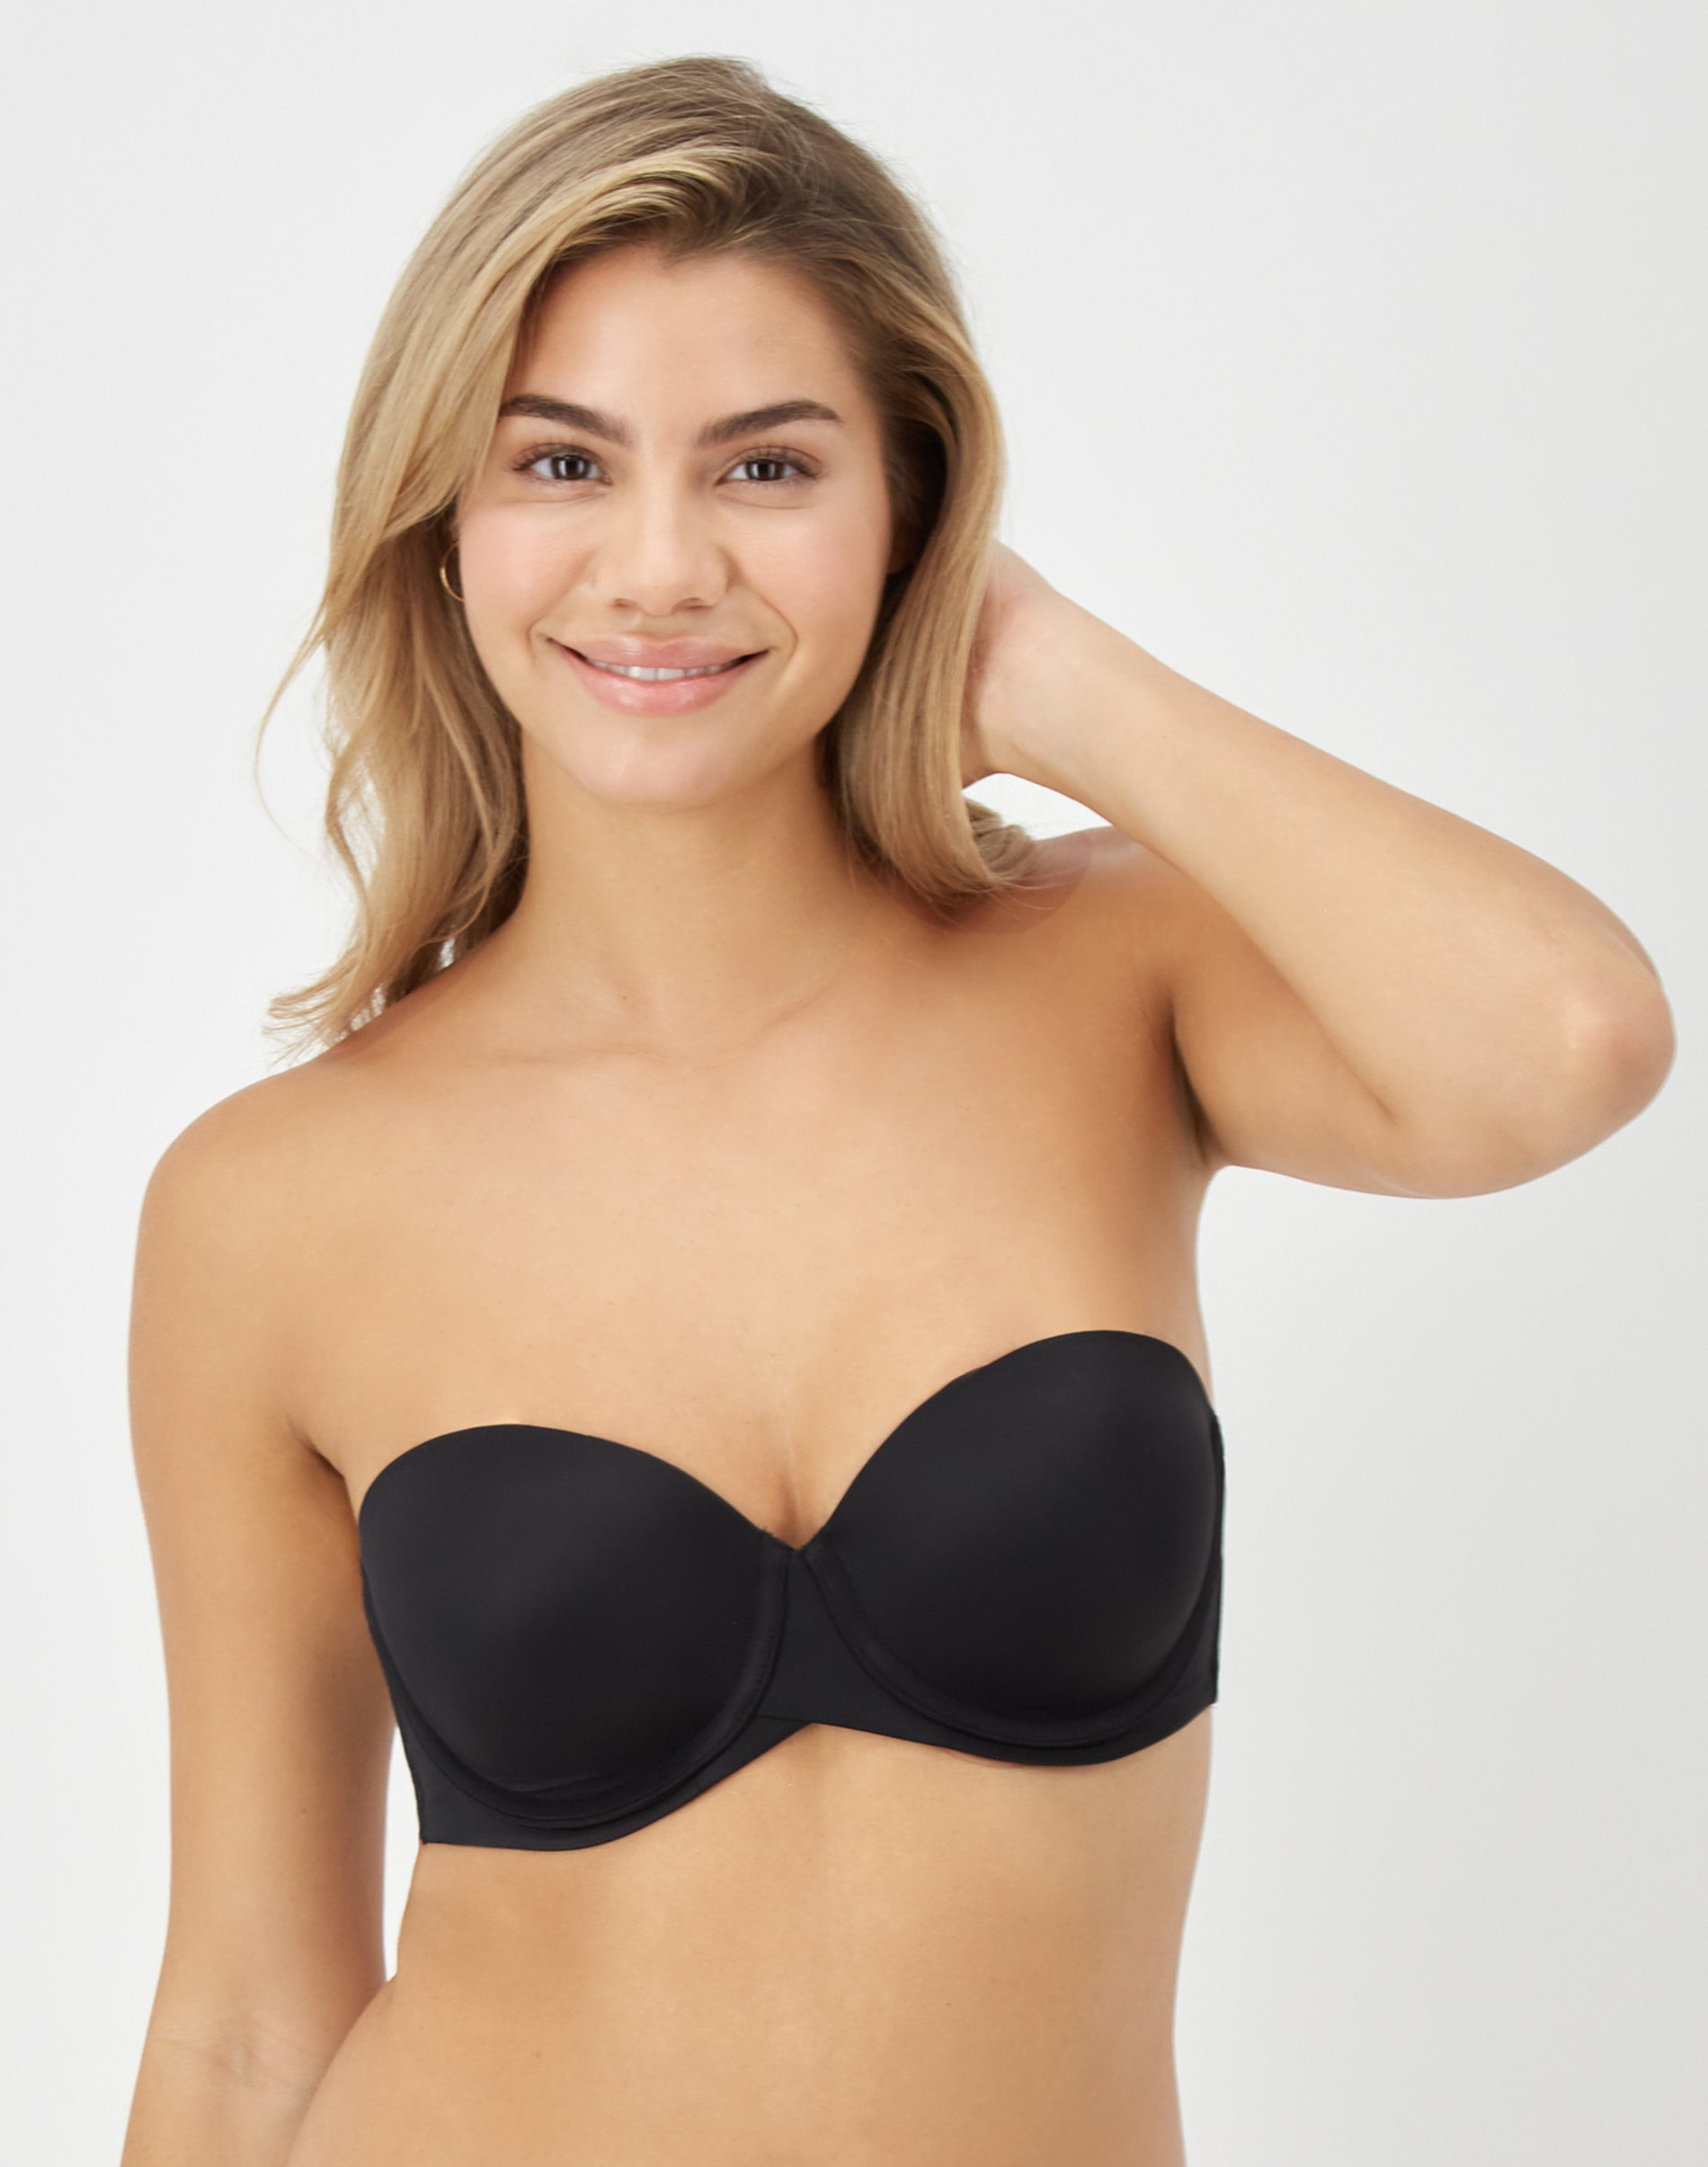 H&M Strapless Black Bra Size 34D  Black bra, Bra sizes, Clothes design